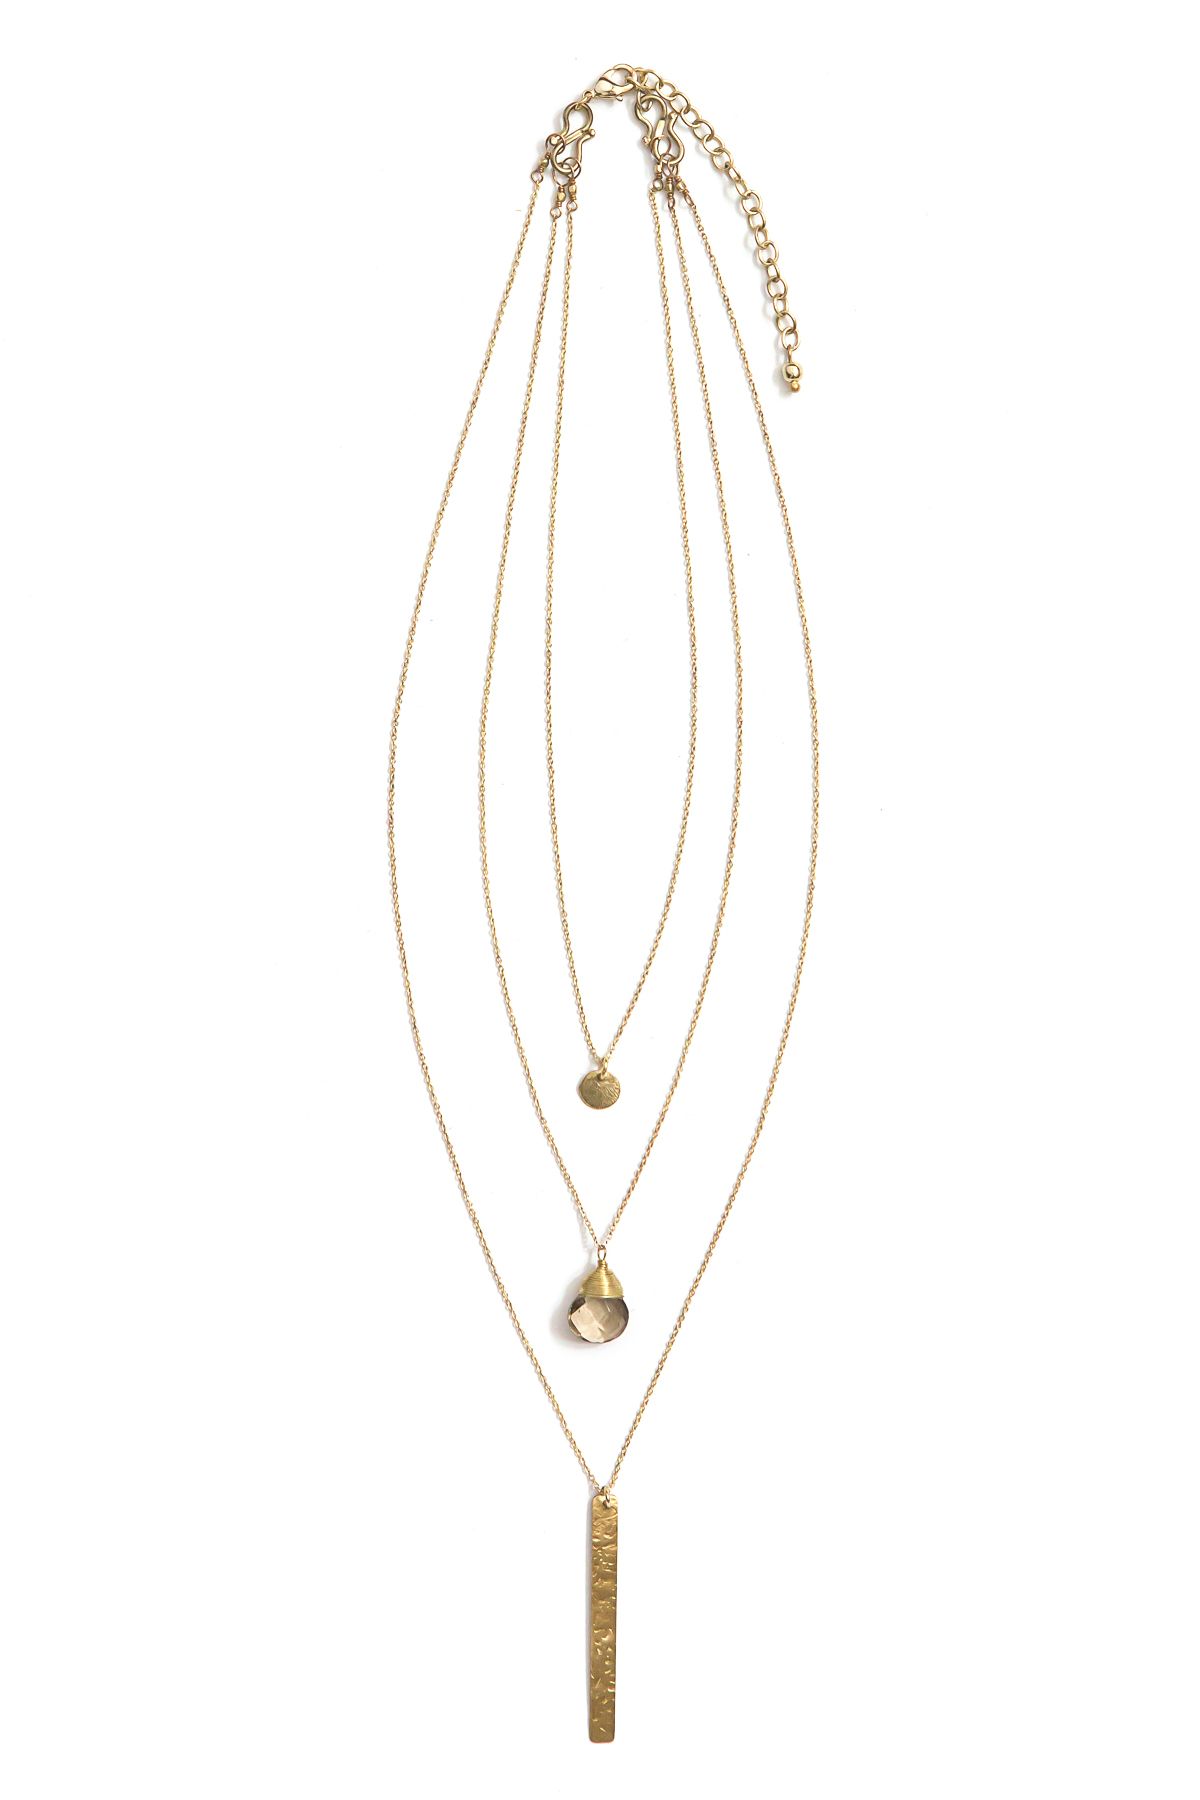 Triple Strand Multi-Way Pendant Necklace - Brass